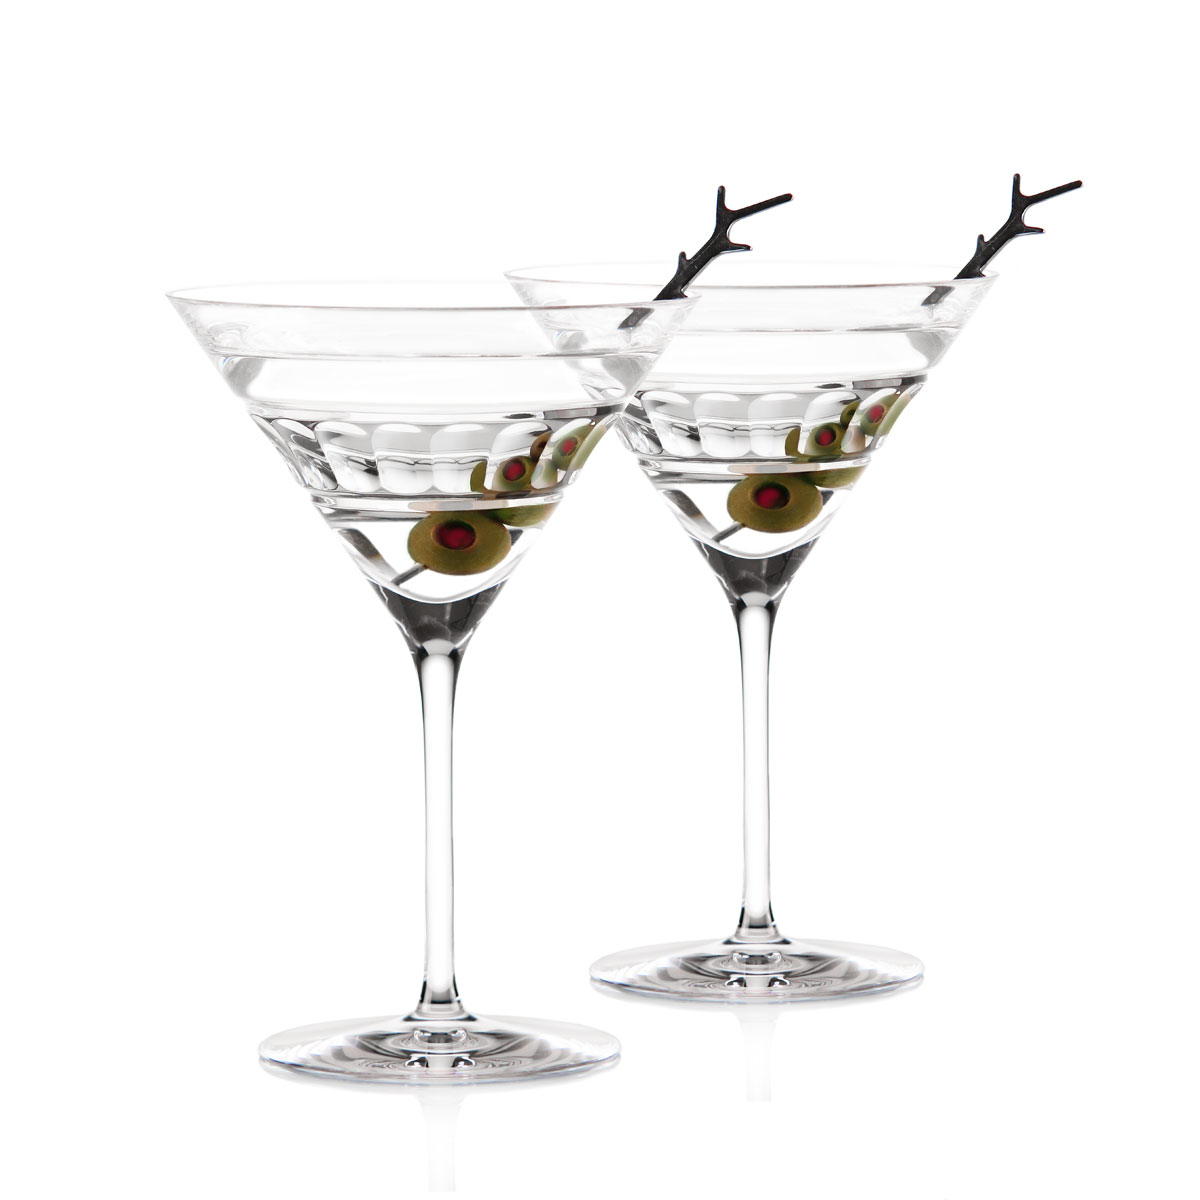 Cashs Ireland, Dunloe Martini Glass, Pair